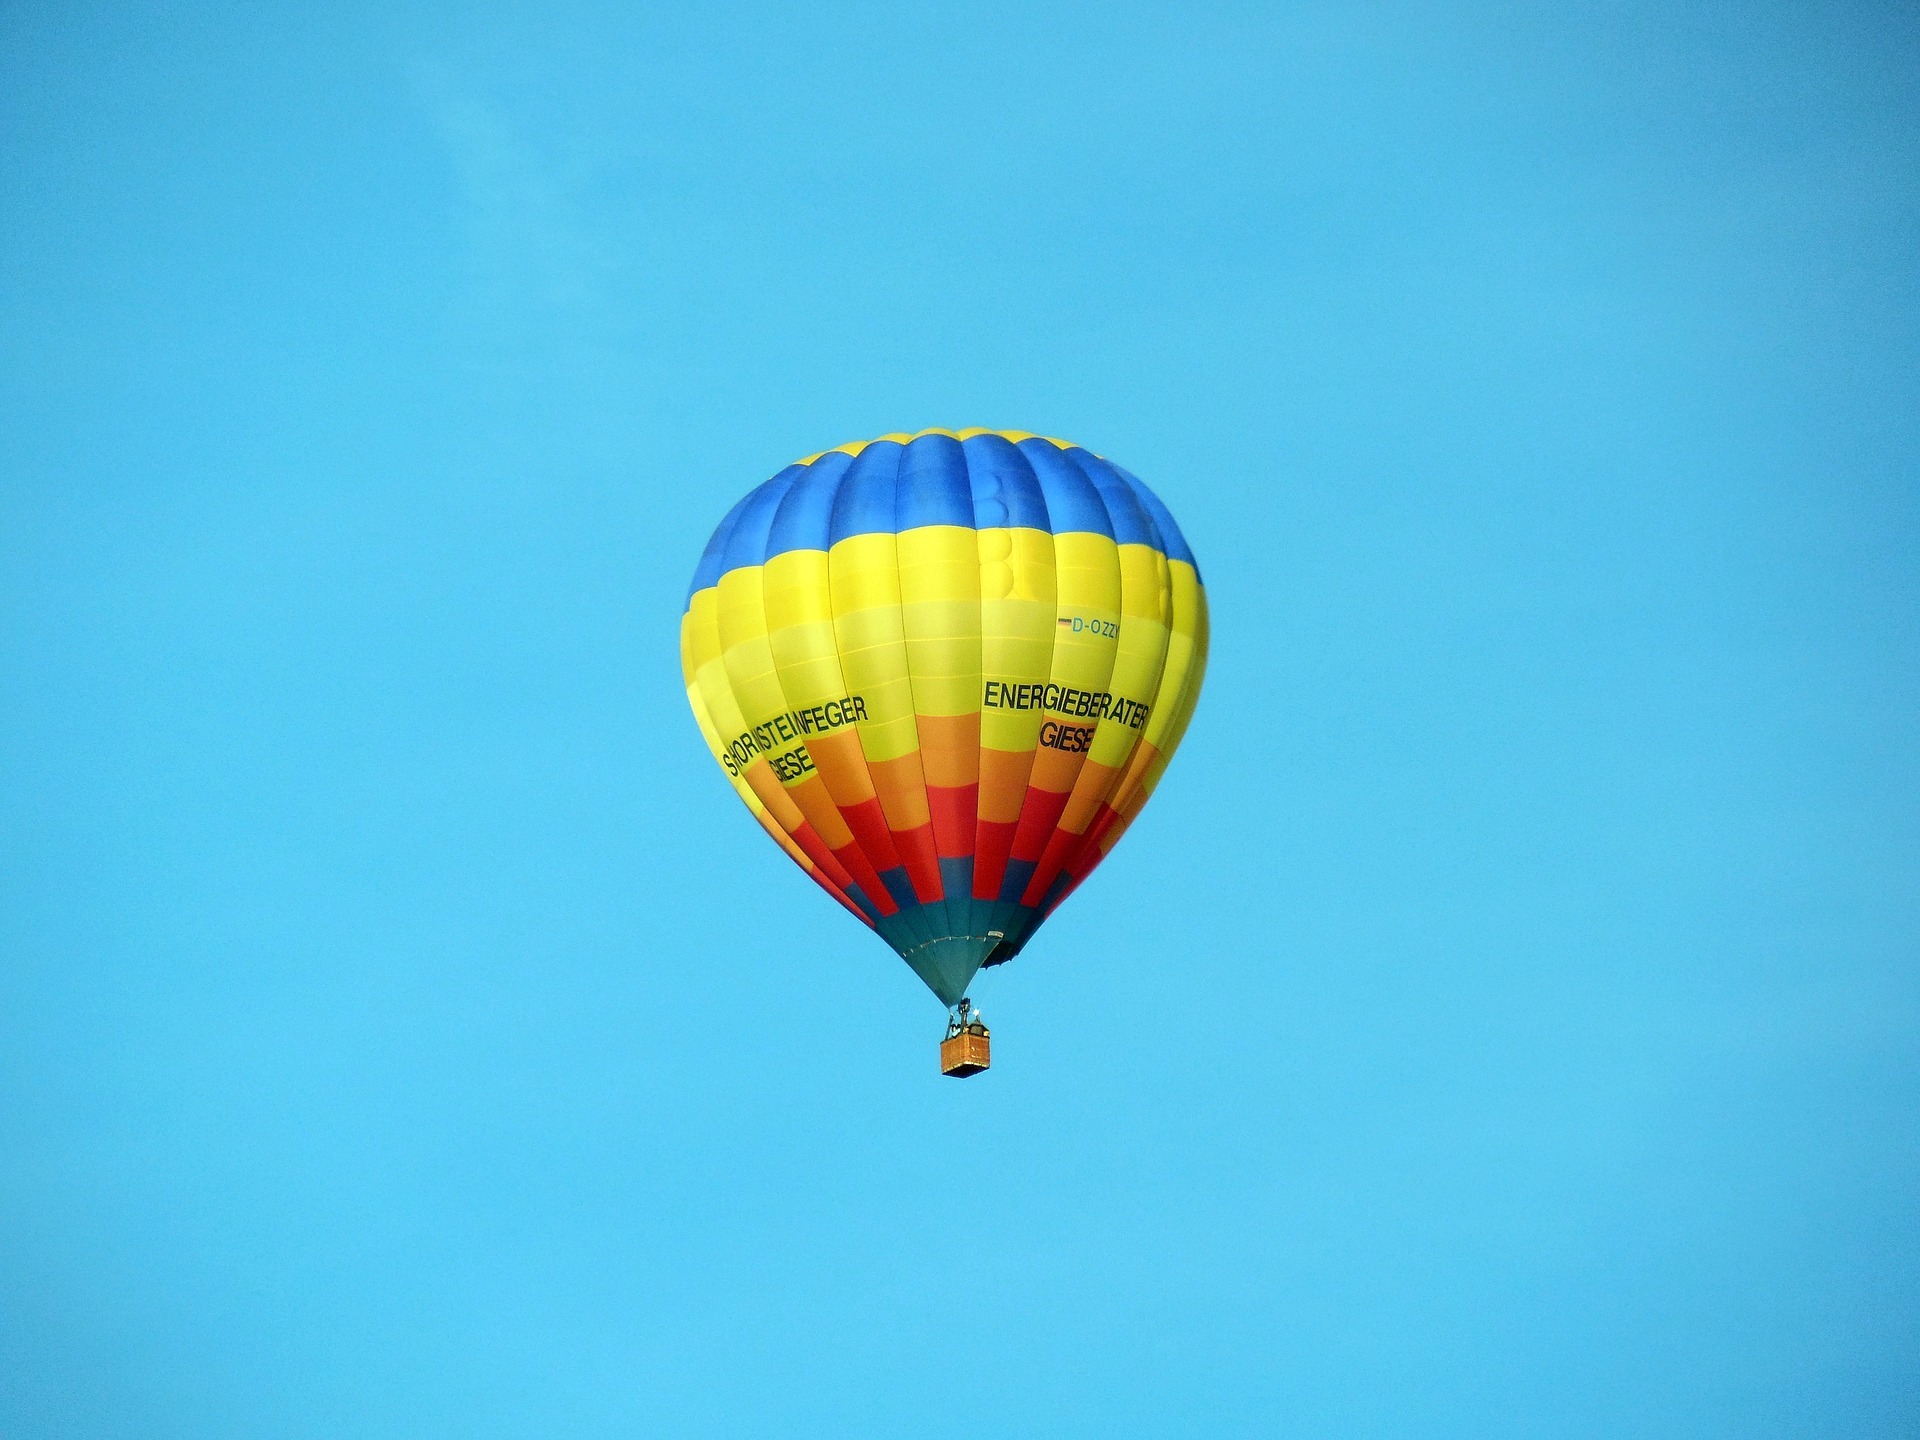 Ballonfahrt Sachsen, Heißluftballon am Himmel